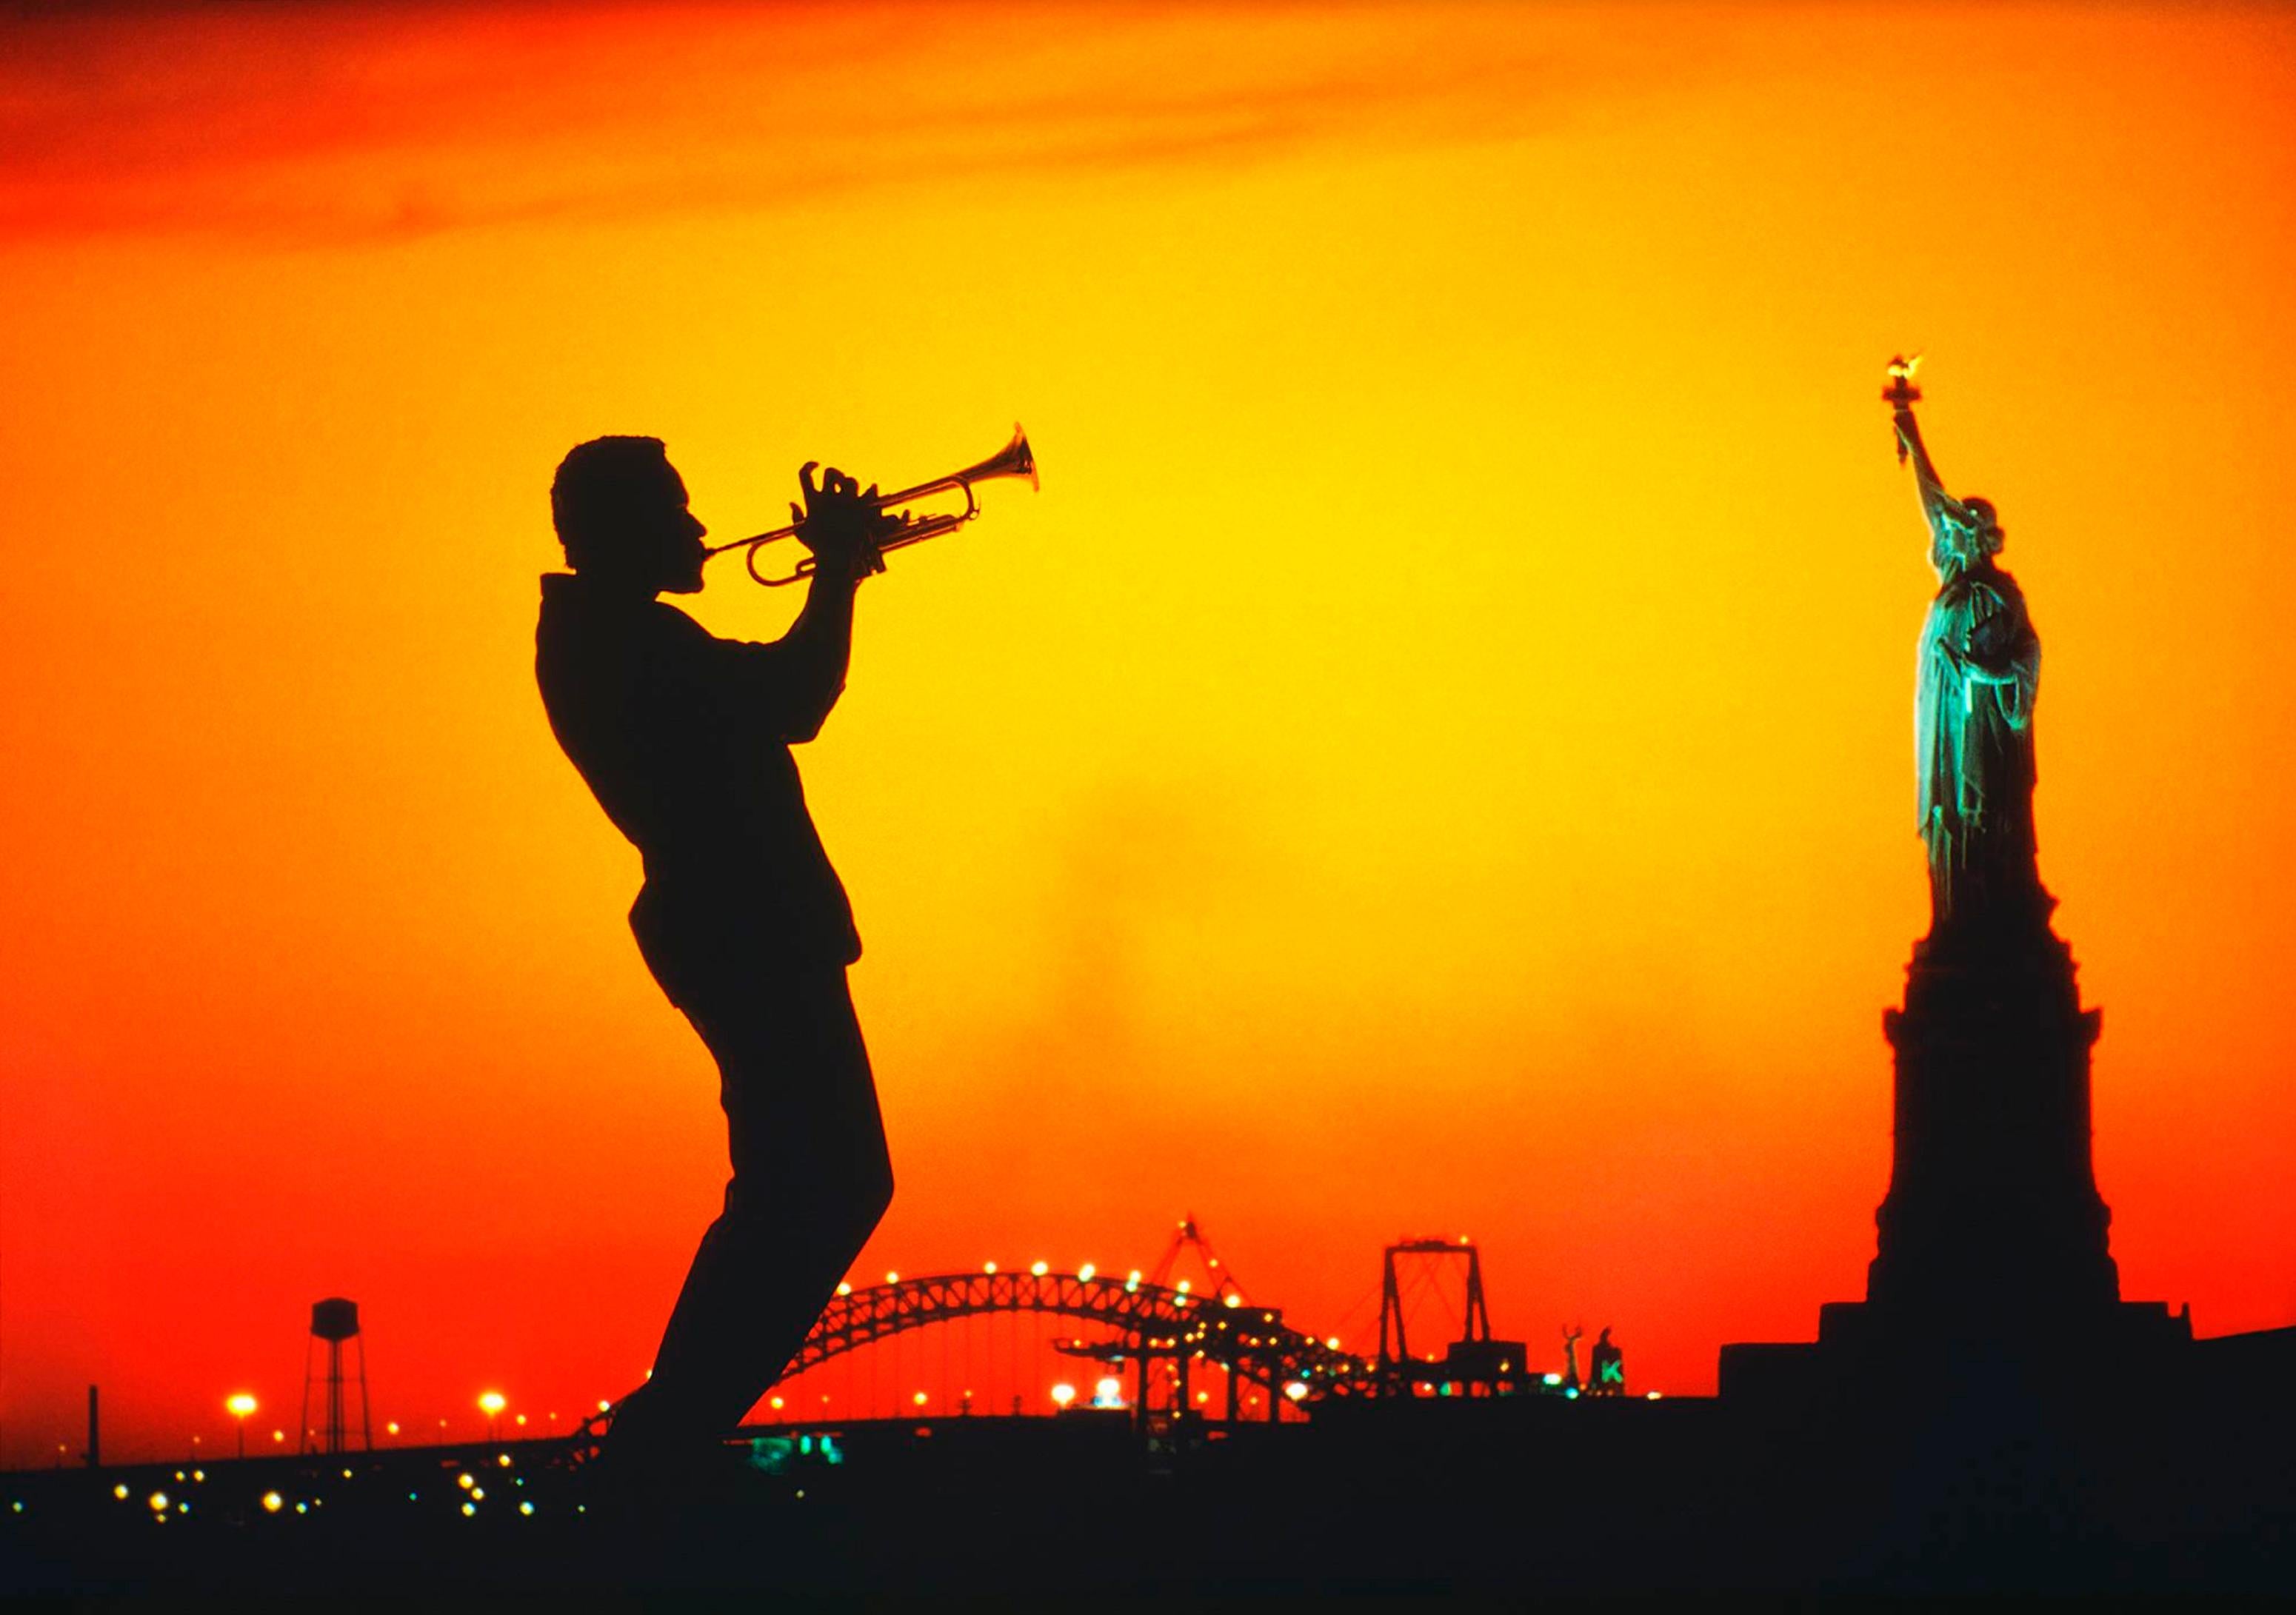 Mitchell Funk Figurative Photograph - Trumpet Jazz Musician  and Statue of Liberty